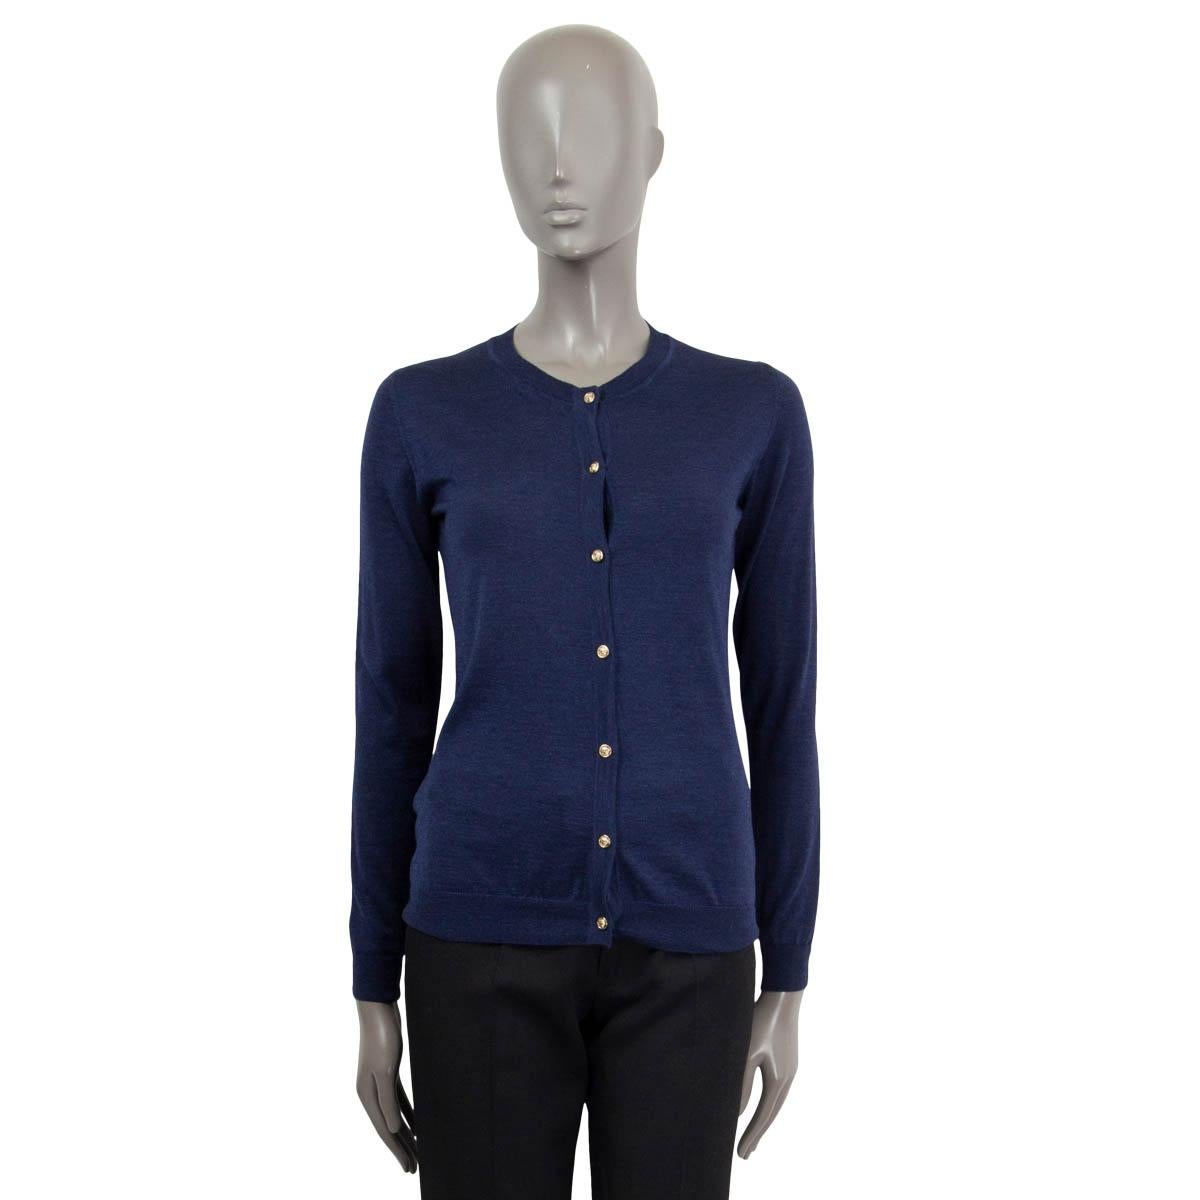 Black VERSACE navy blue cashmere & silk BUTTON FRONT CREWNECK Cardigan Sweater 40 S For Sale